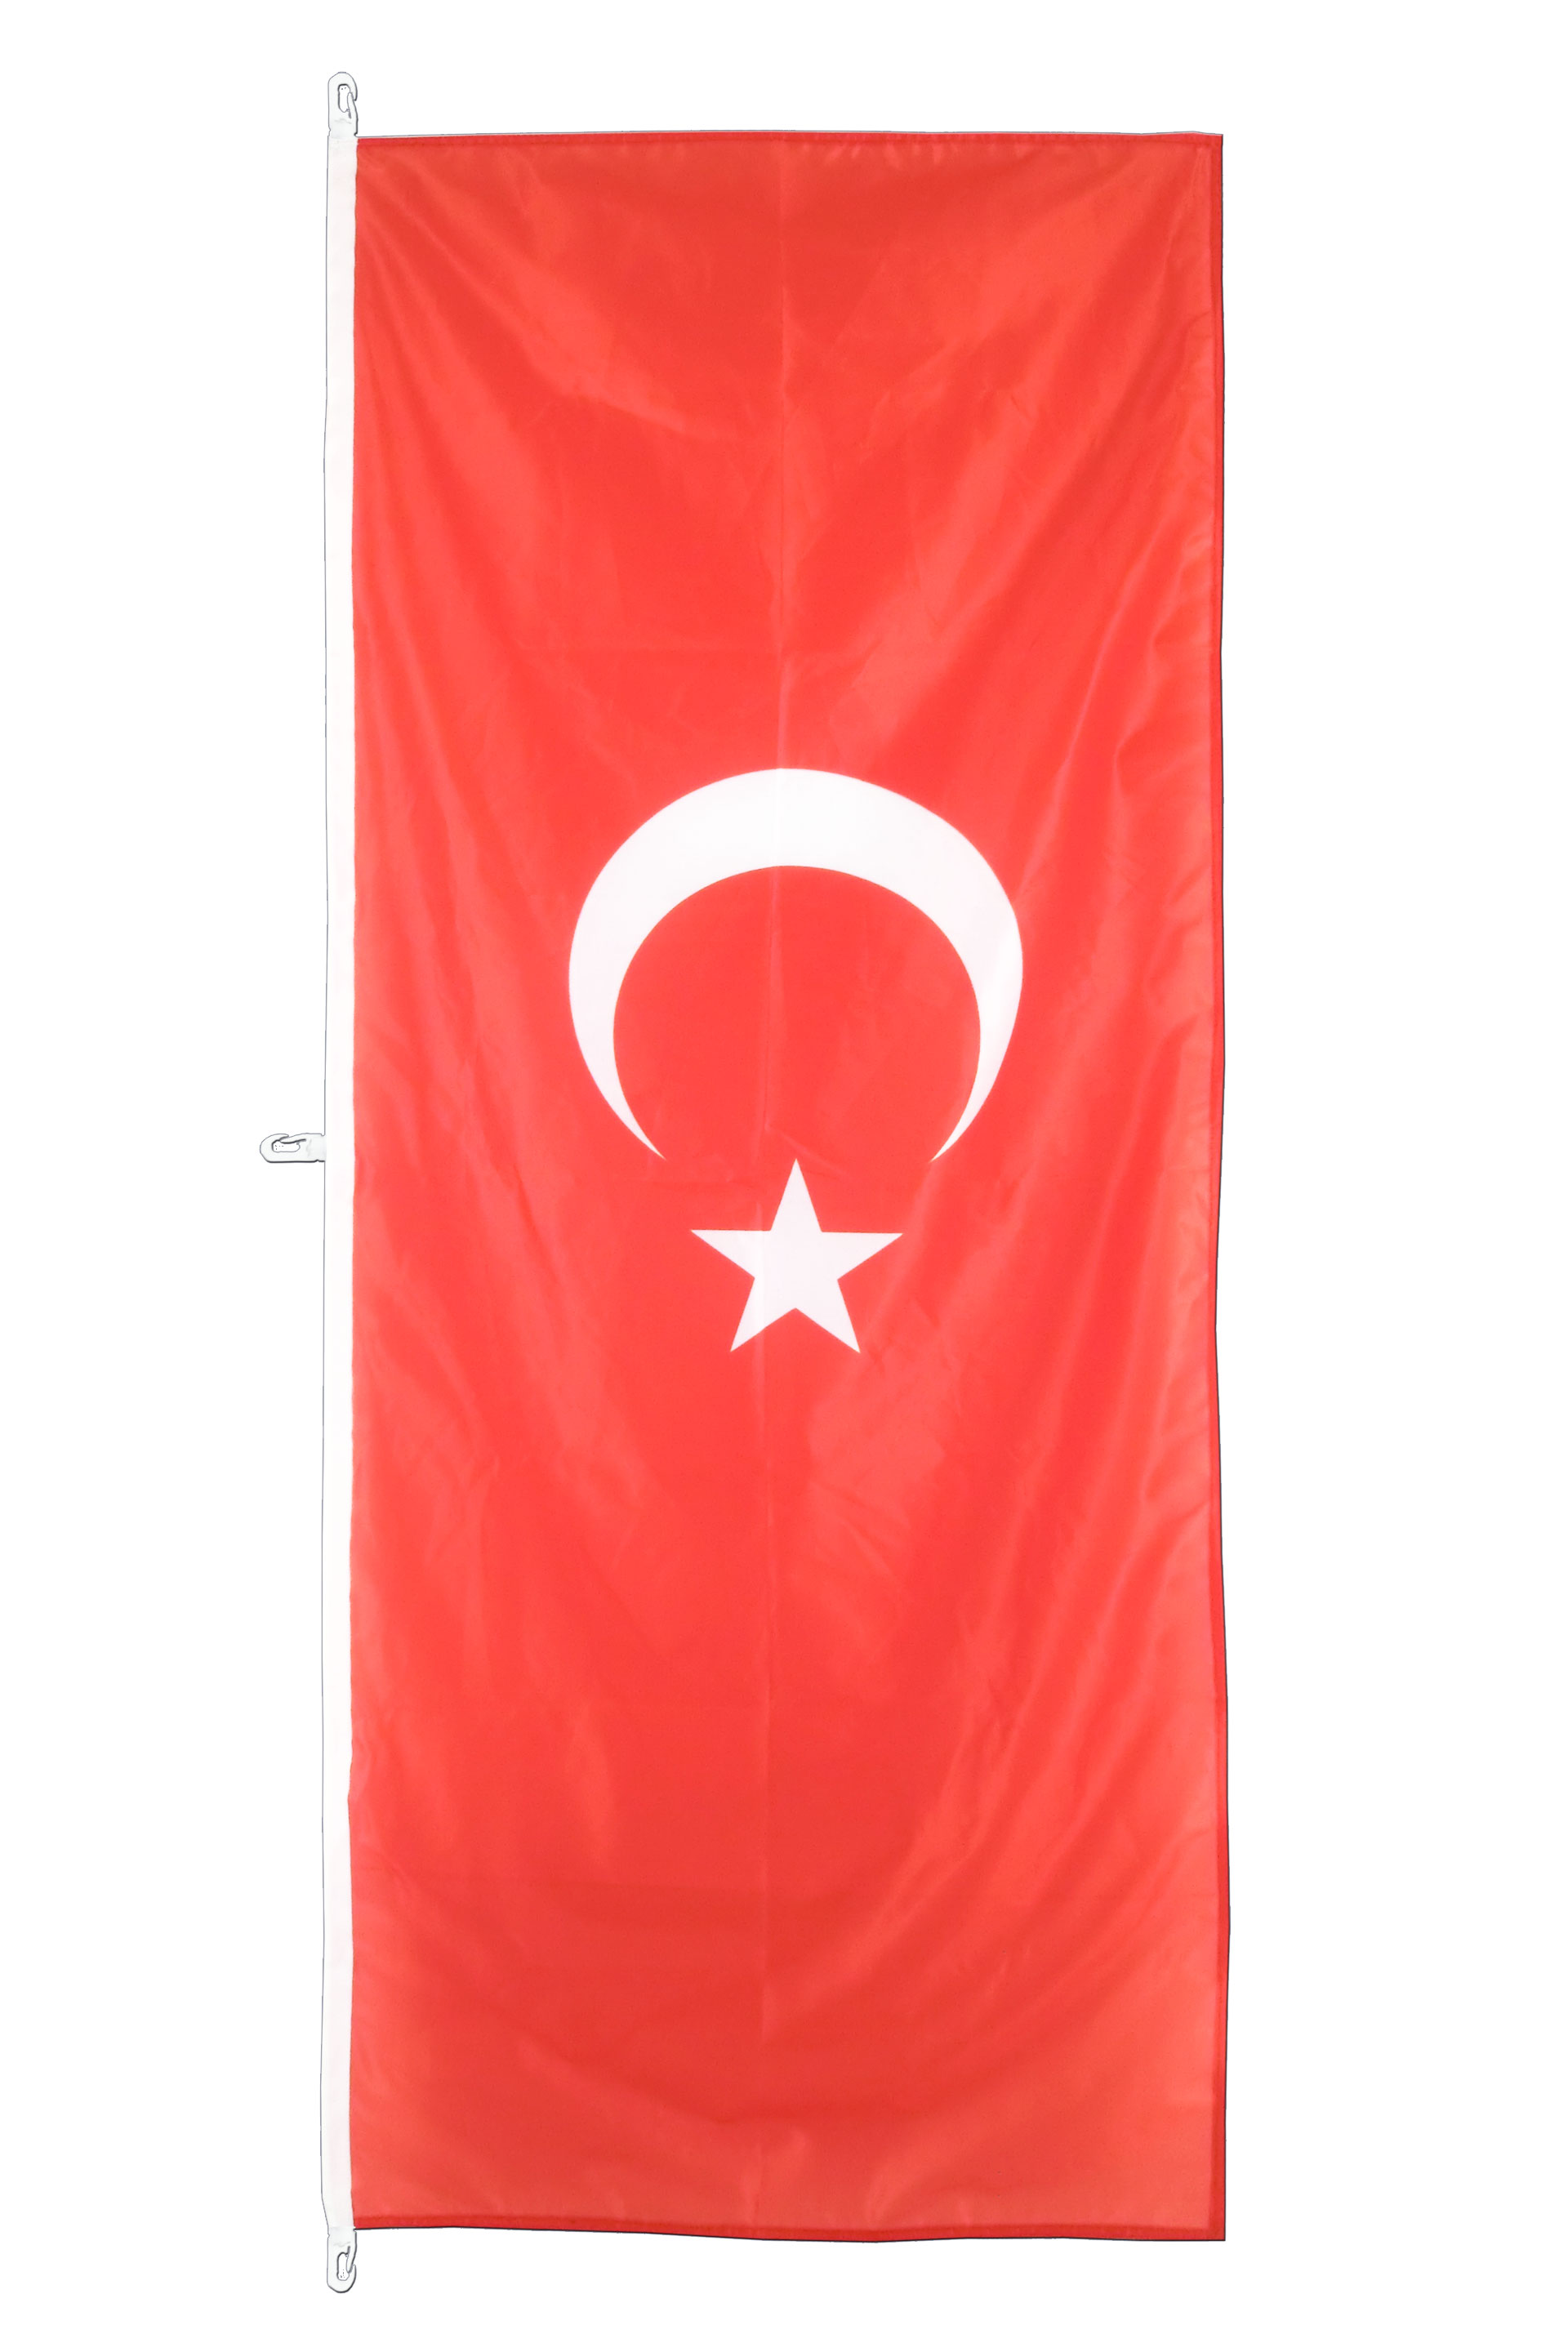 Türkei Hochformat Flagge 80 x 200 cm - FlaggenPlatz Shop